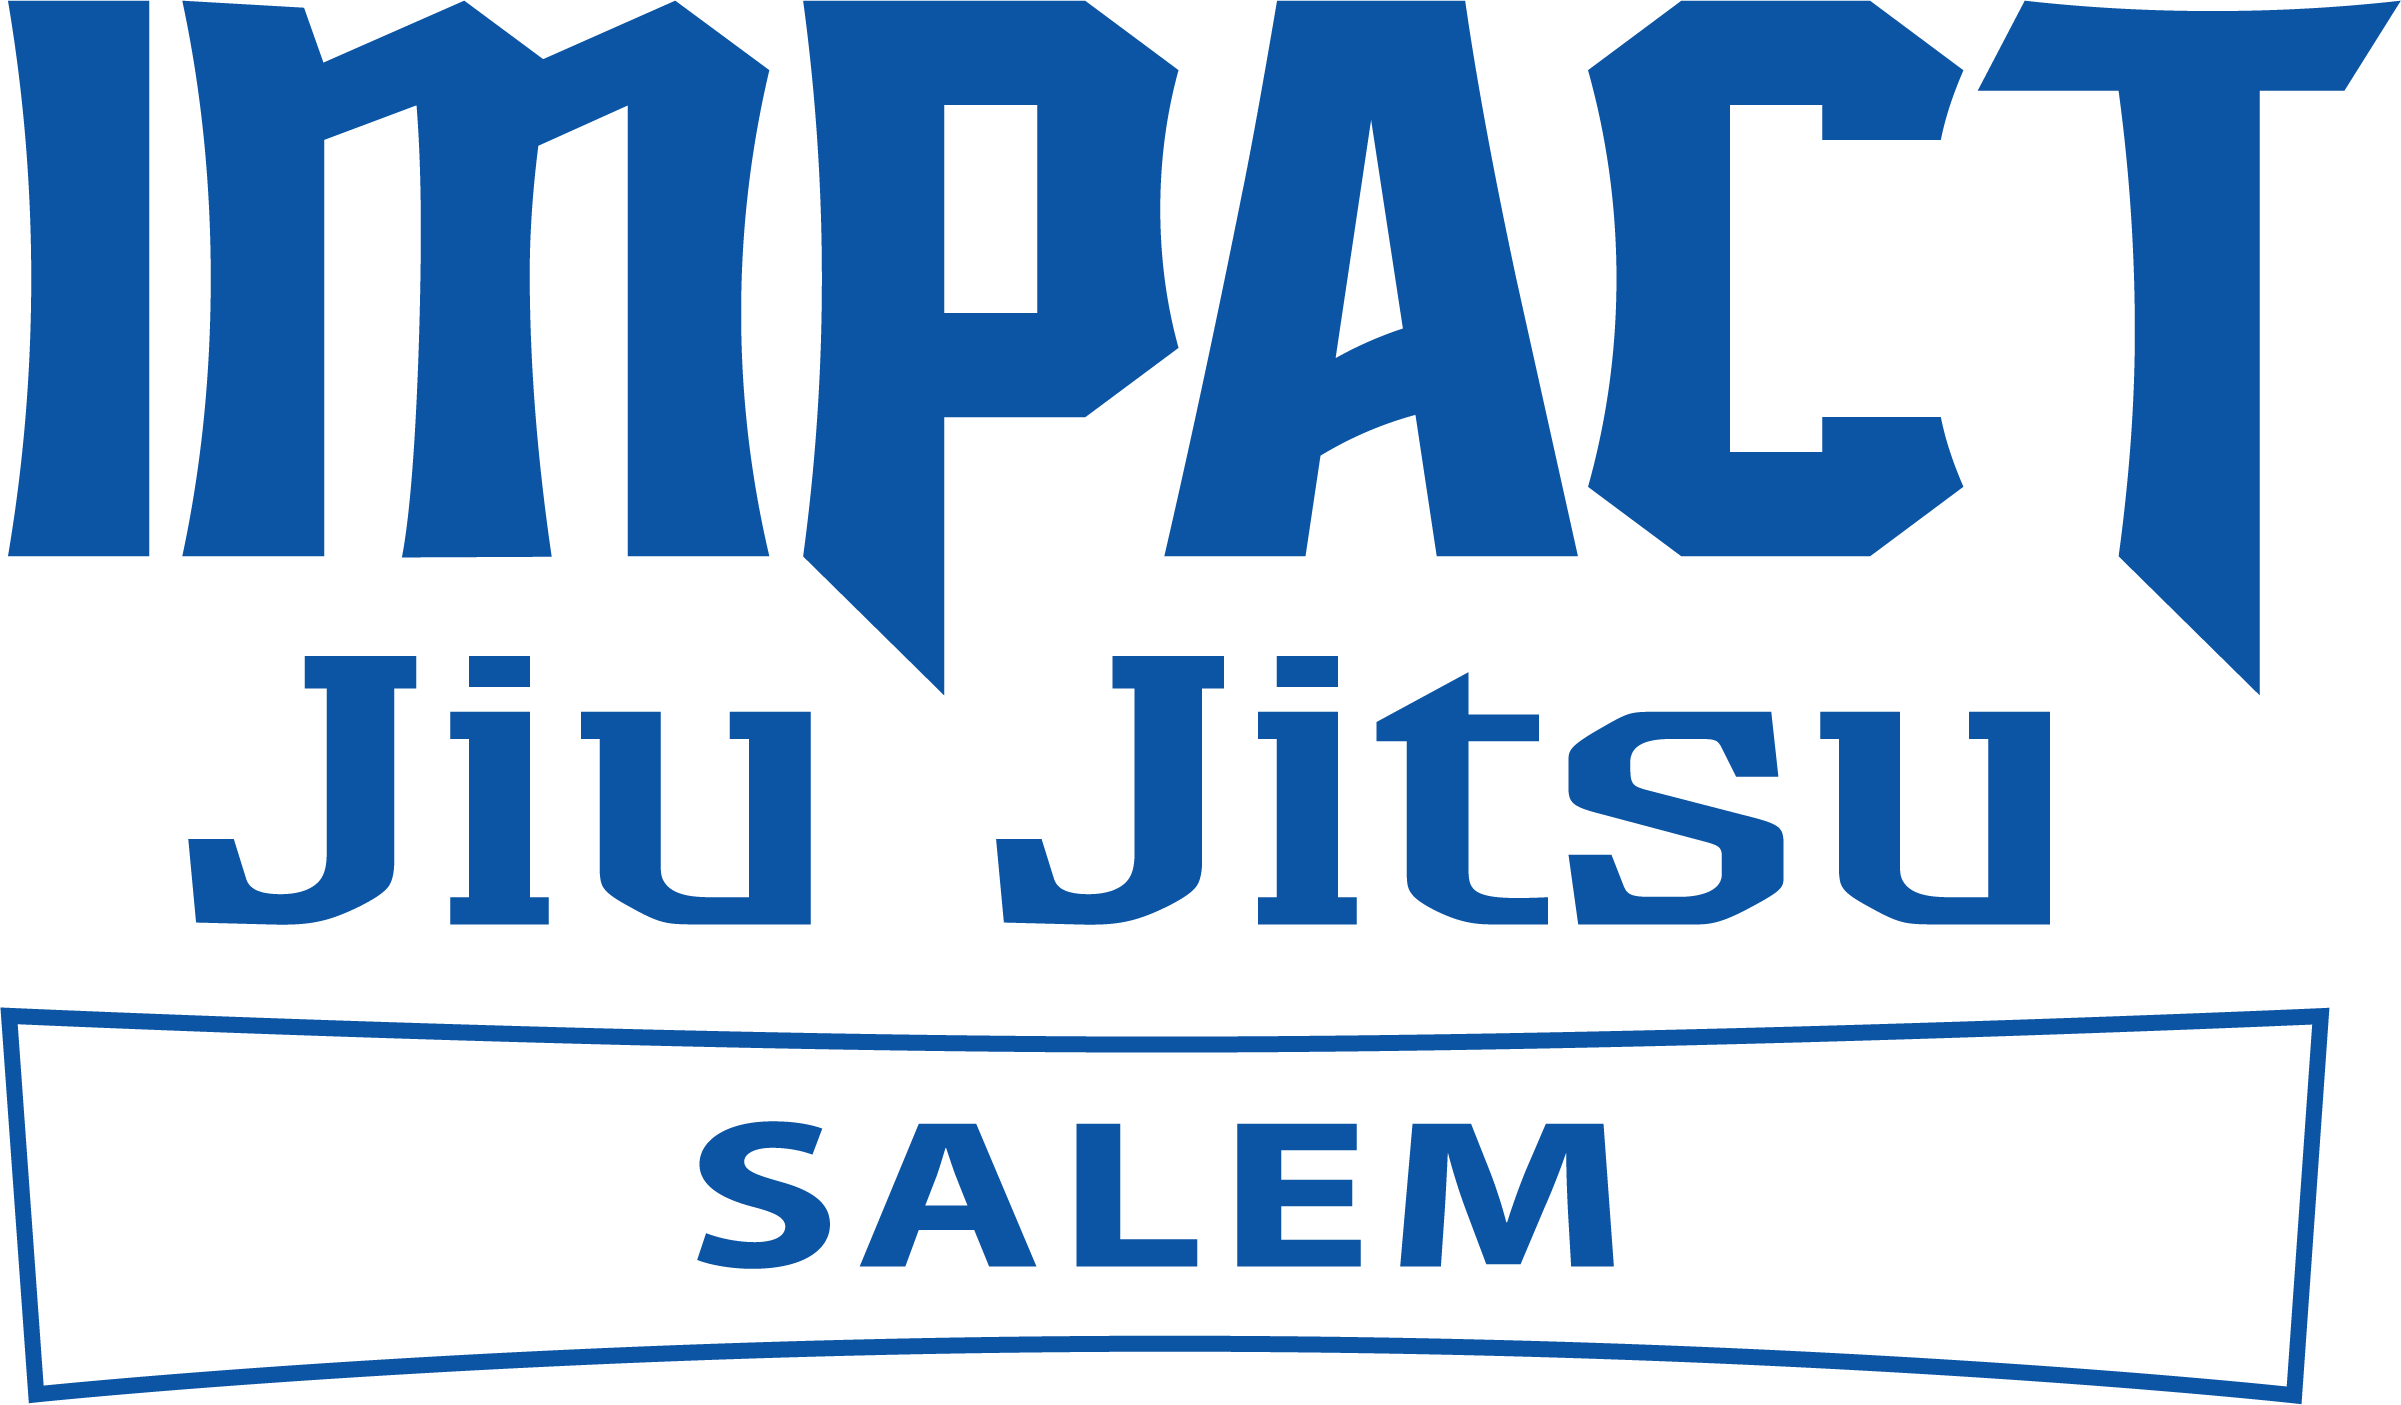 Impact Jiu Jitsu